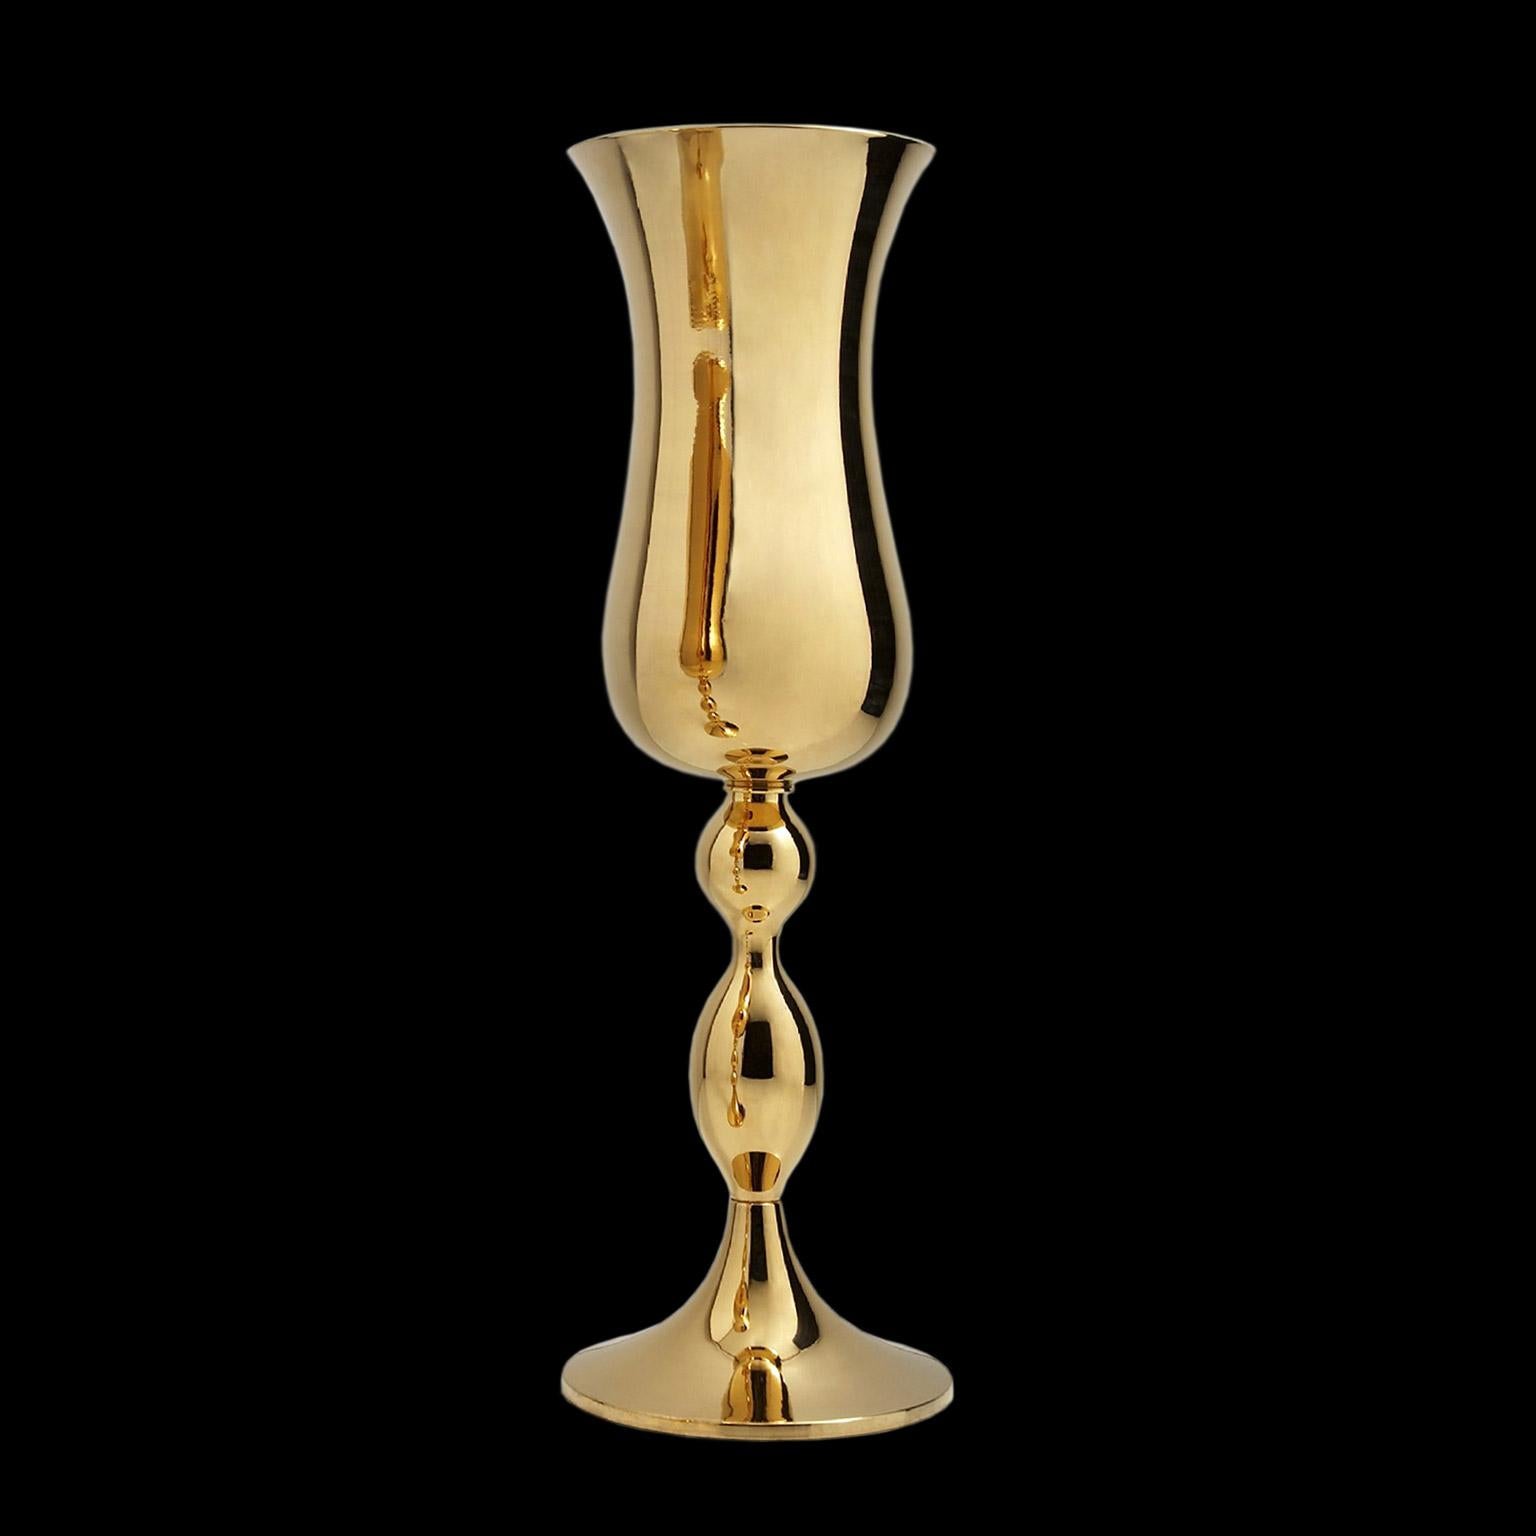 Ceramic vase BOB 
cod. CP005
handcrafted in 24-karat gold outside
and white glazed inside

measurers: 
Height 107.0 cm.
diameter 30.0 cm.
